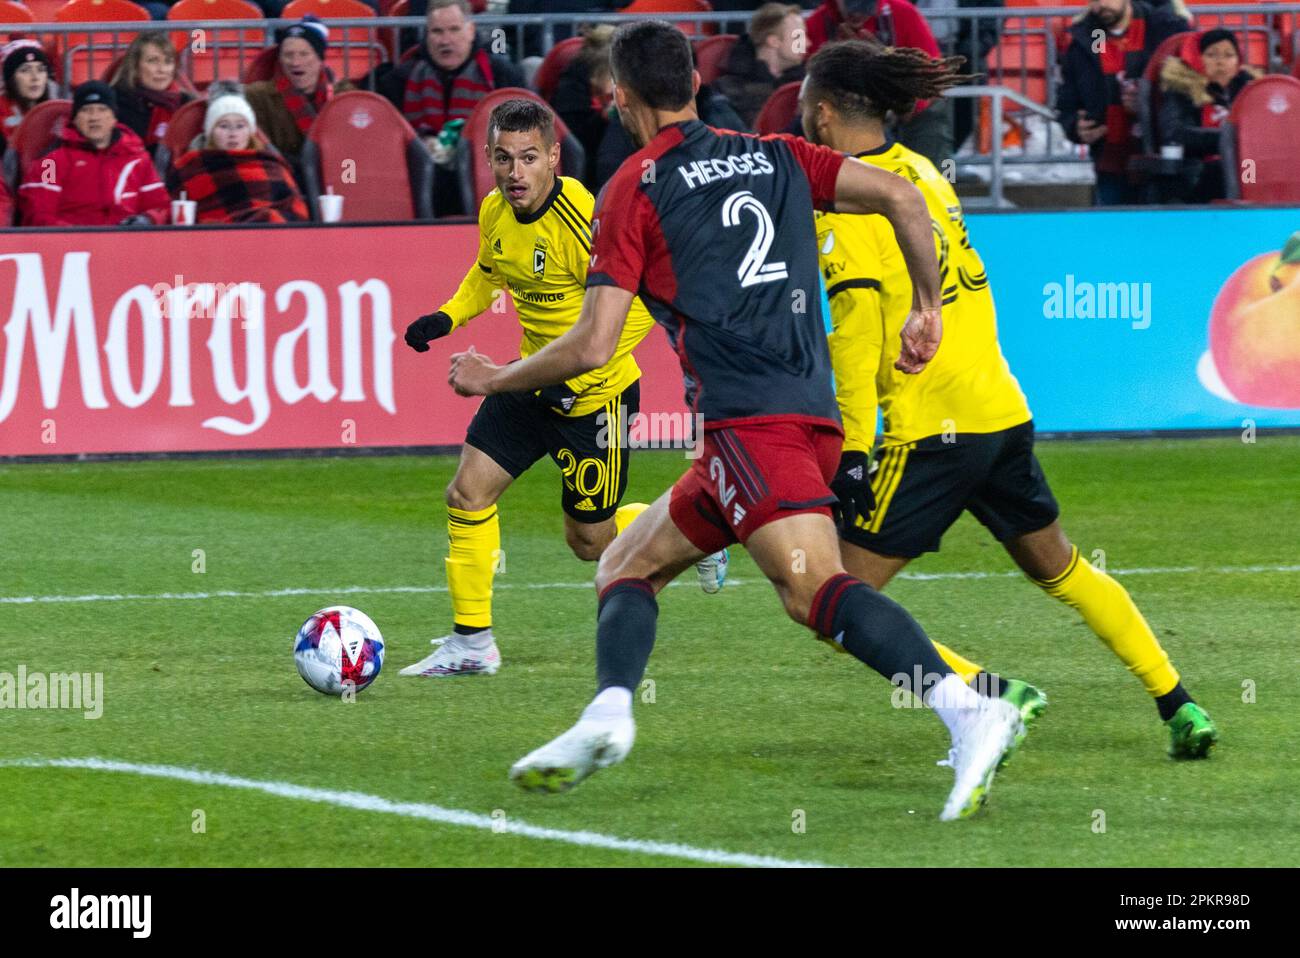 Toronto, ON, Canada - Match 23: Alexandru Matan #20 midfielder of the Columbus Crew runs with the ball during the 2023 MLS Regular Season match betwee Stock Photo